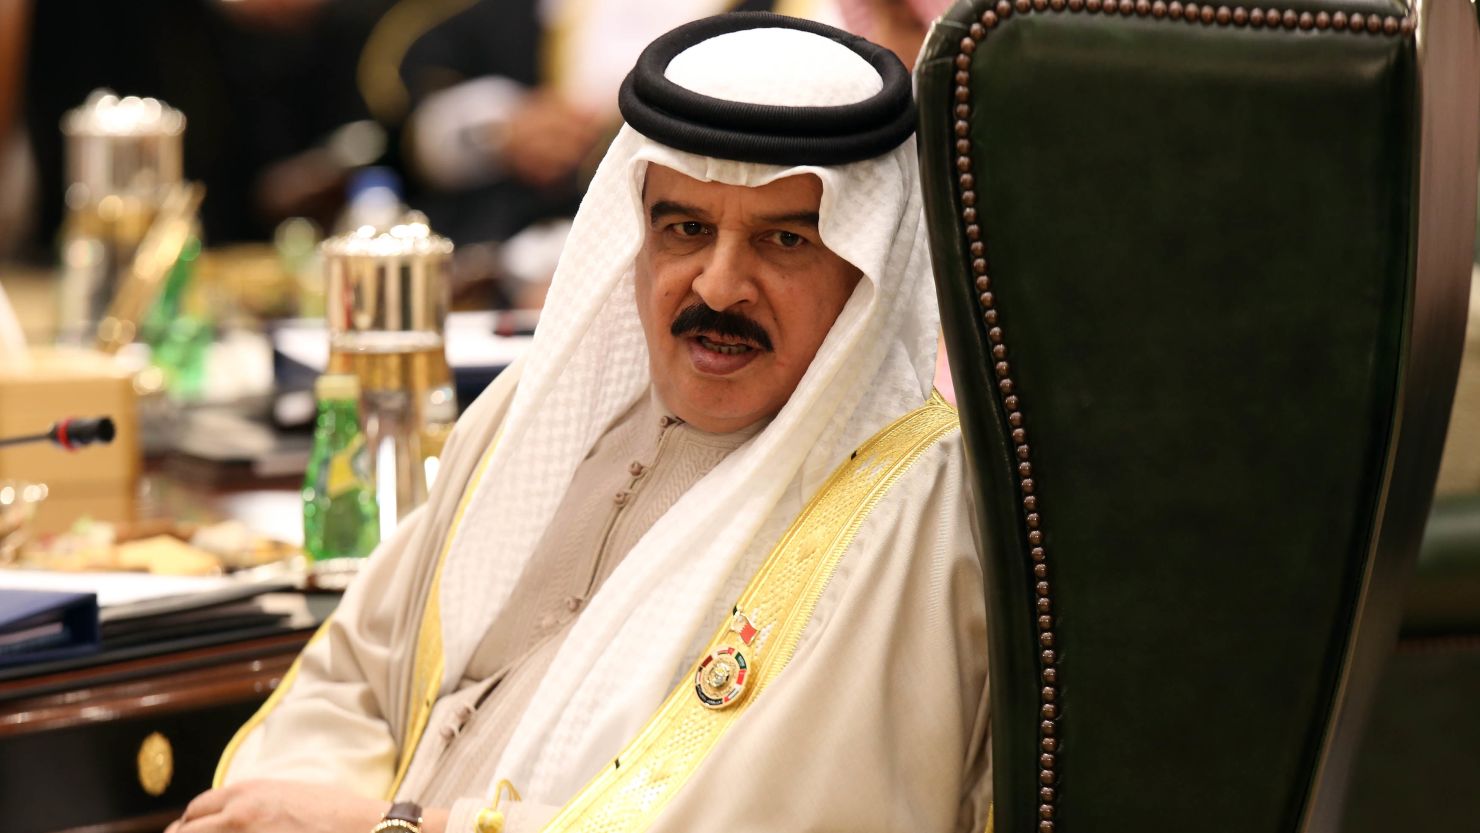 The King of Bahrain, Hamad bin Isa al-Khalifa, at the Bayan Royal Palace in Kuwait City, on December 10, 2013.